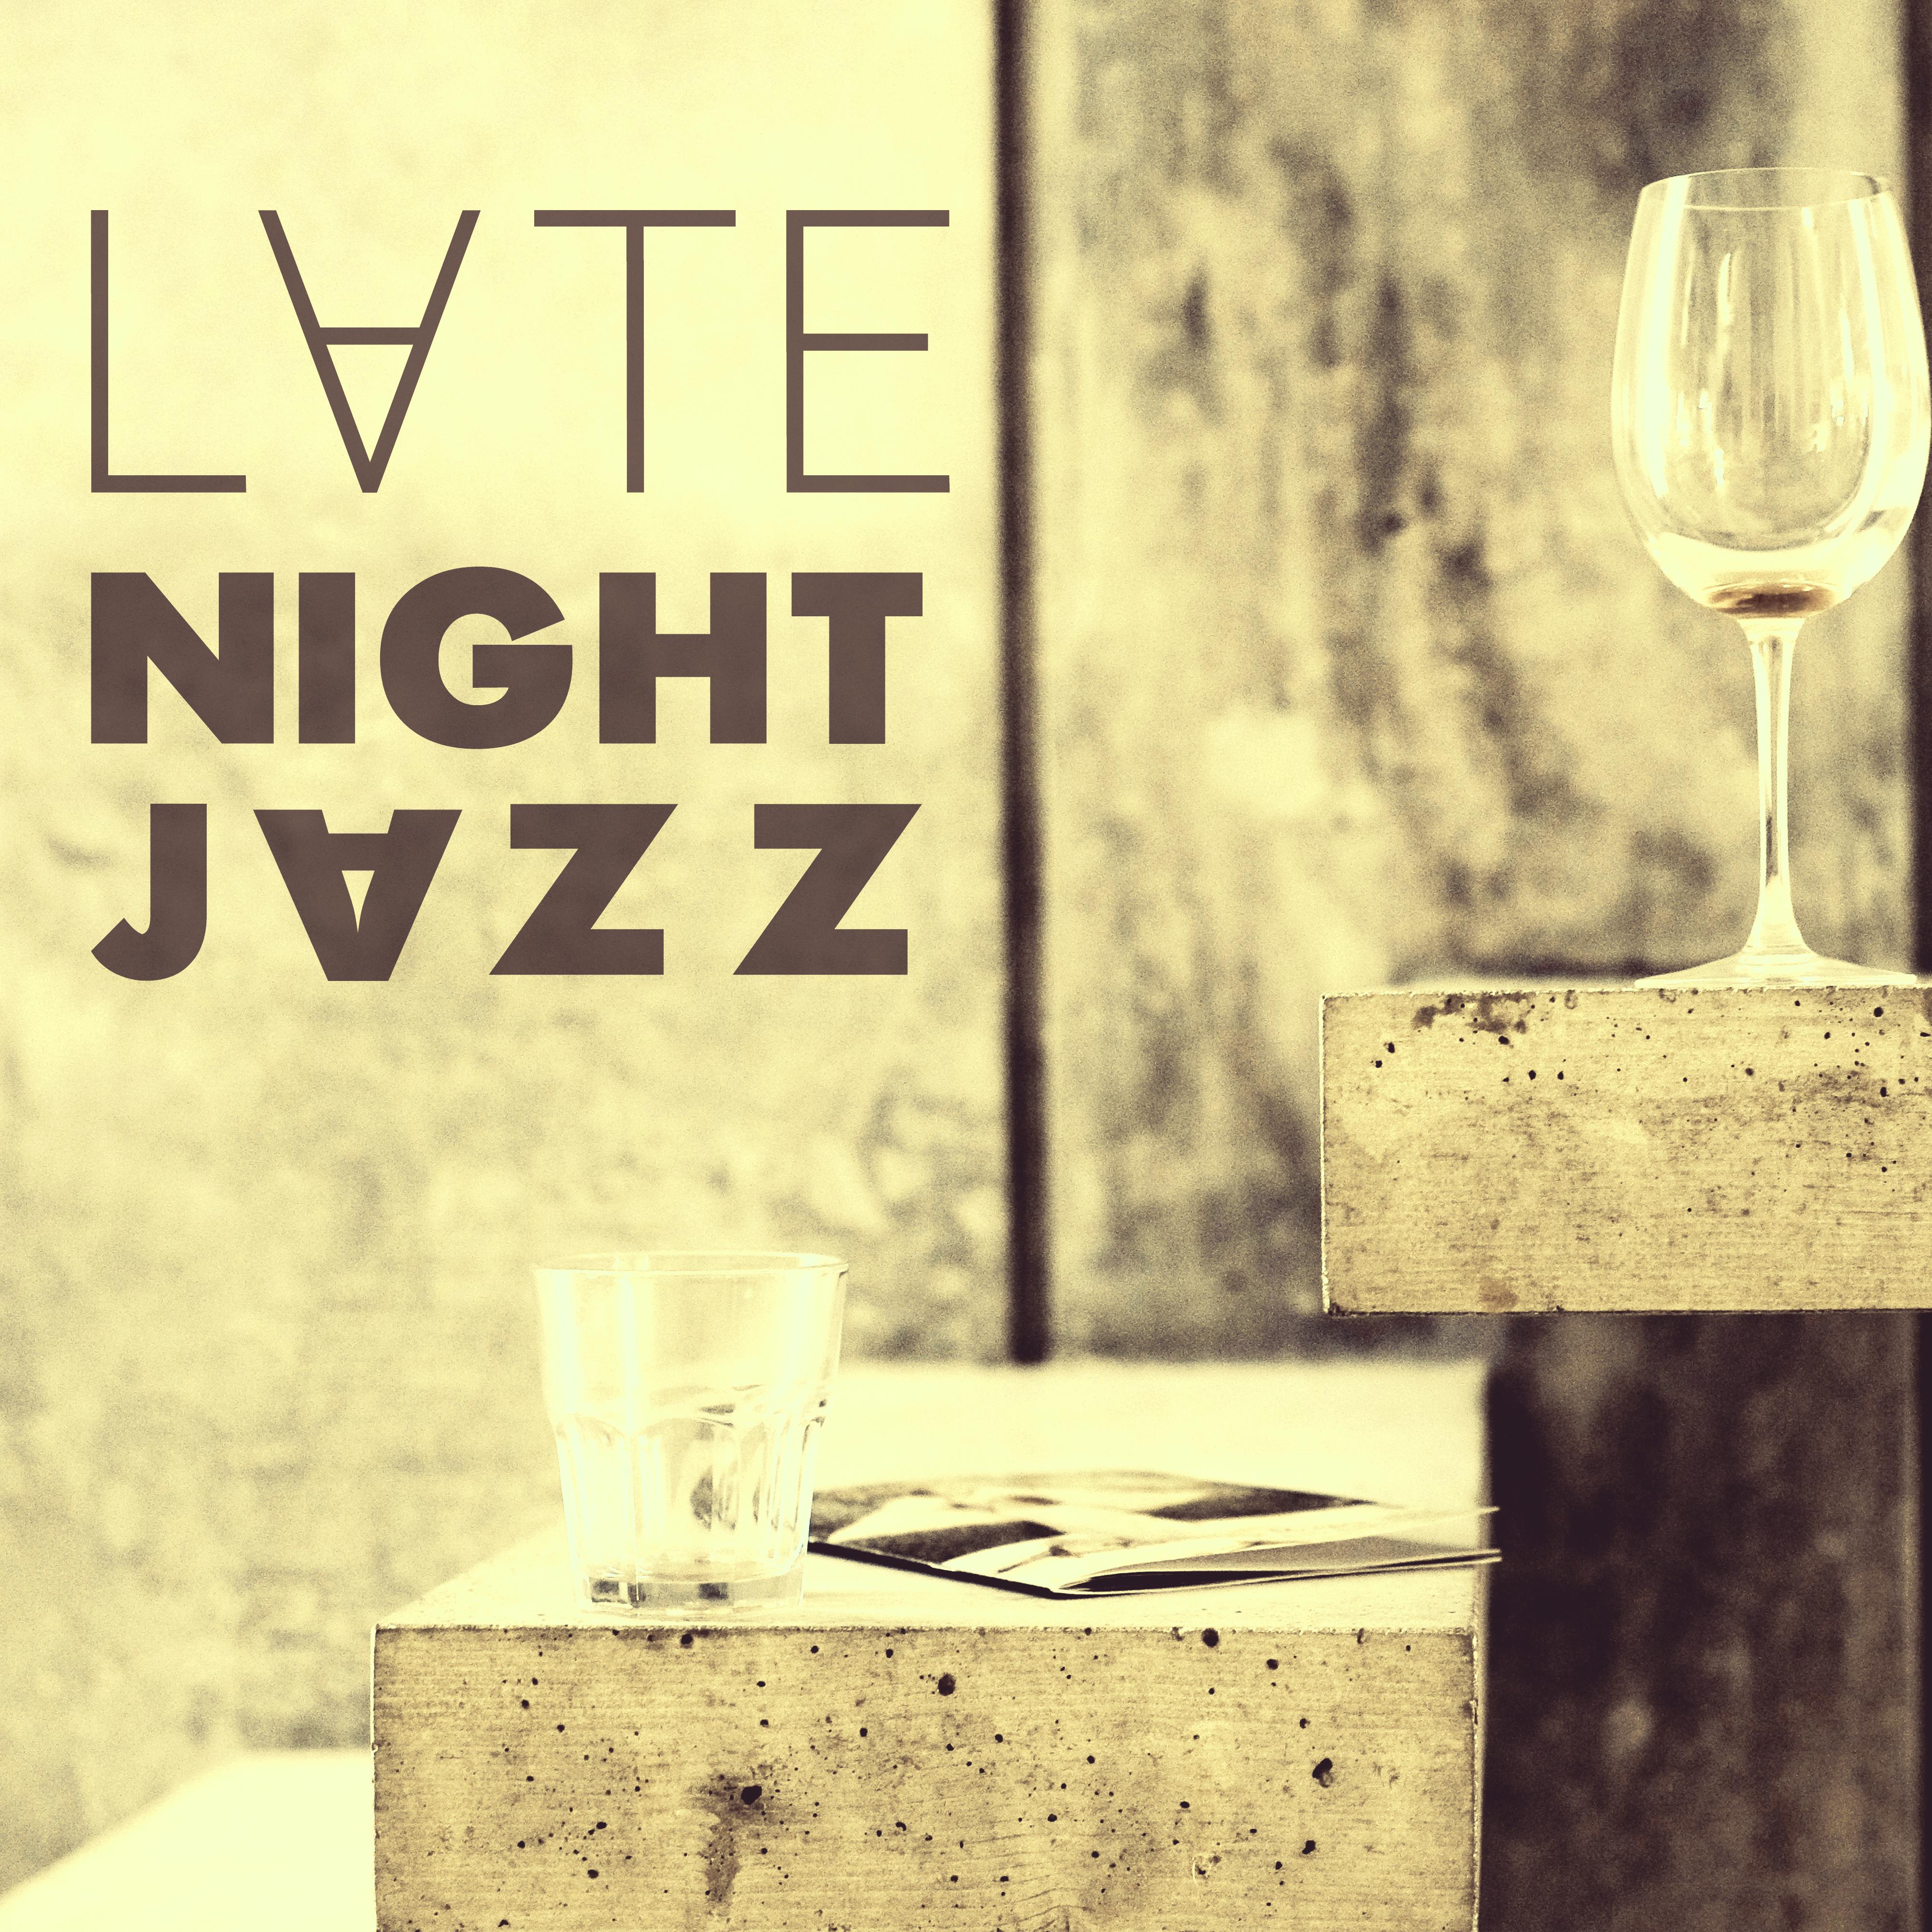 Latte Night Jazz  Best Instrumental Jazz Sounds, Jazz Piano Sounds, Relaxing Coffee, Jazz Lounge, Easy Listening Music